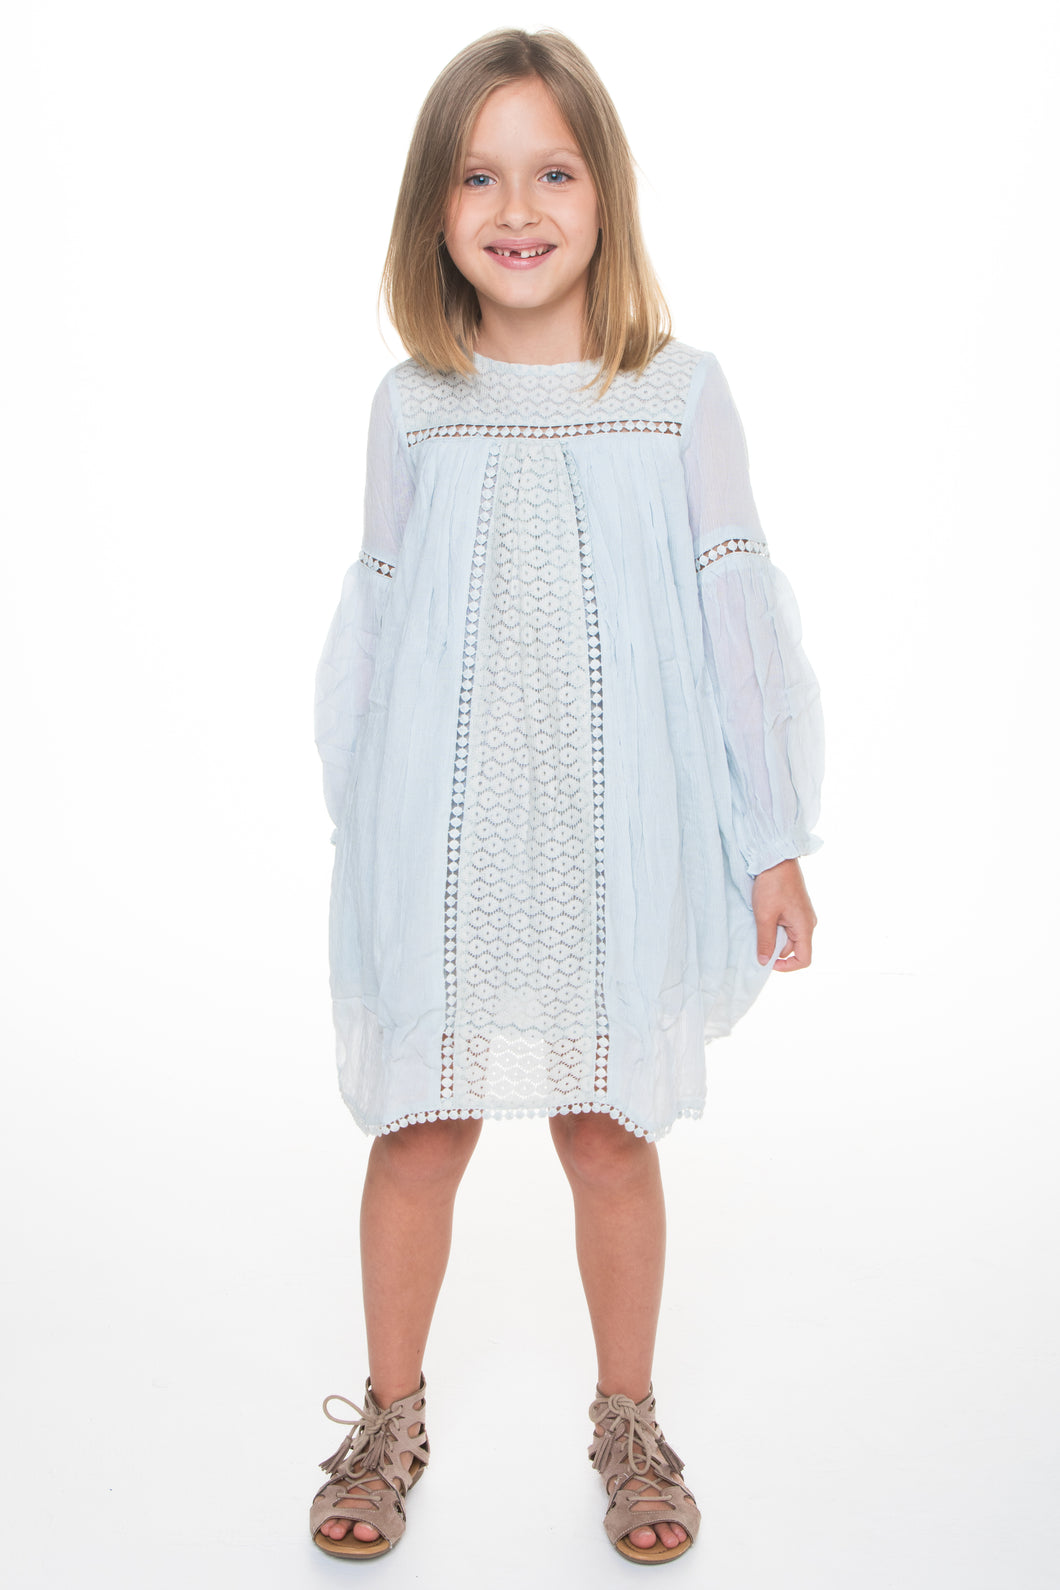 Light Blue Lace Detail Dress - Kids Wholesale Boutique Clothing, Dress - Girls Dresses, Yo Baby Wholesale - Yo Baby